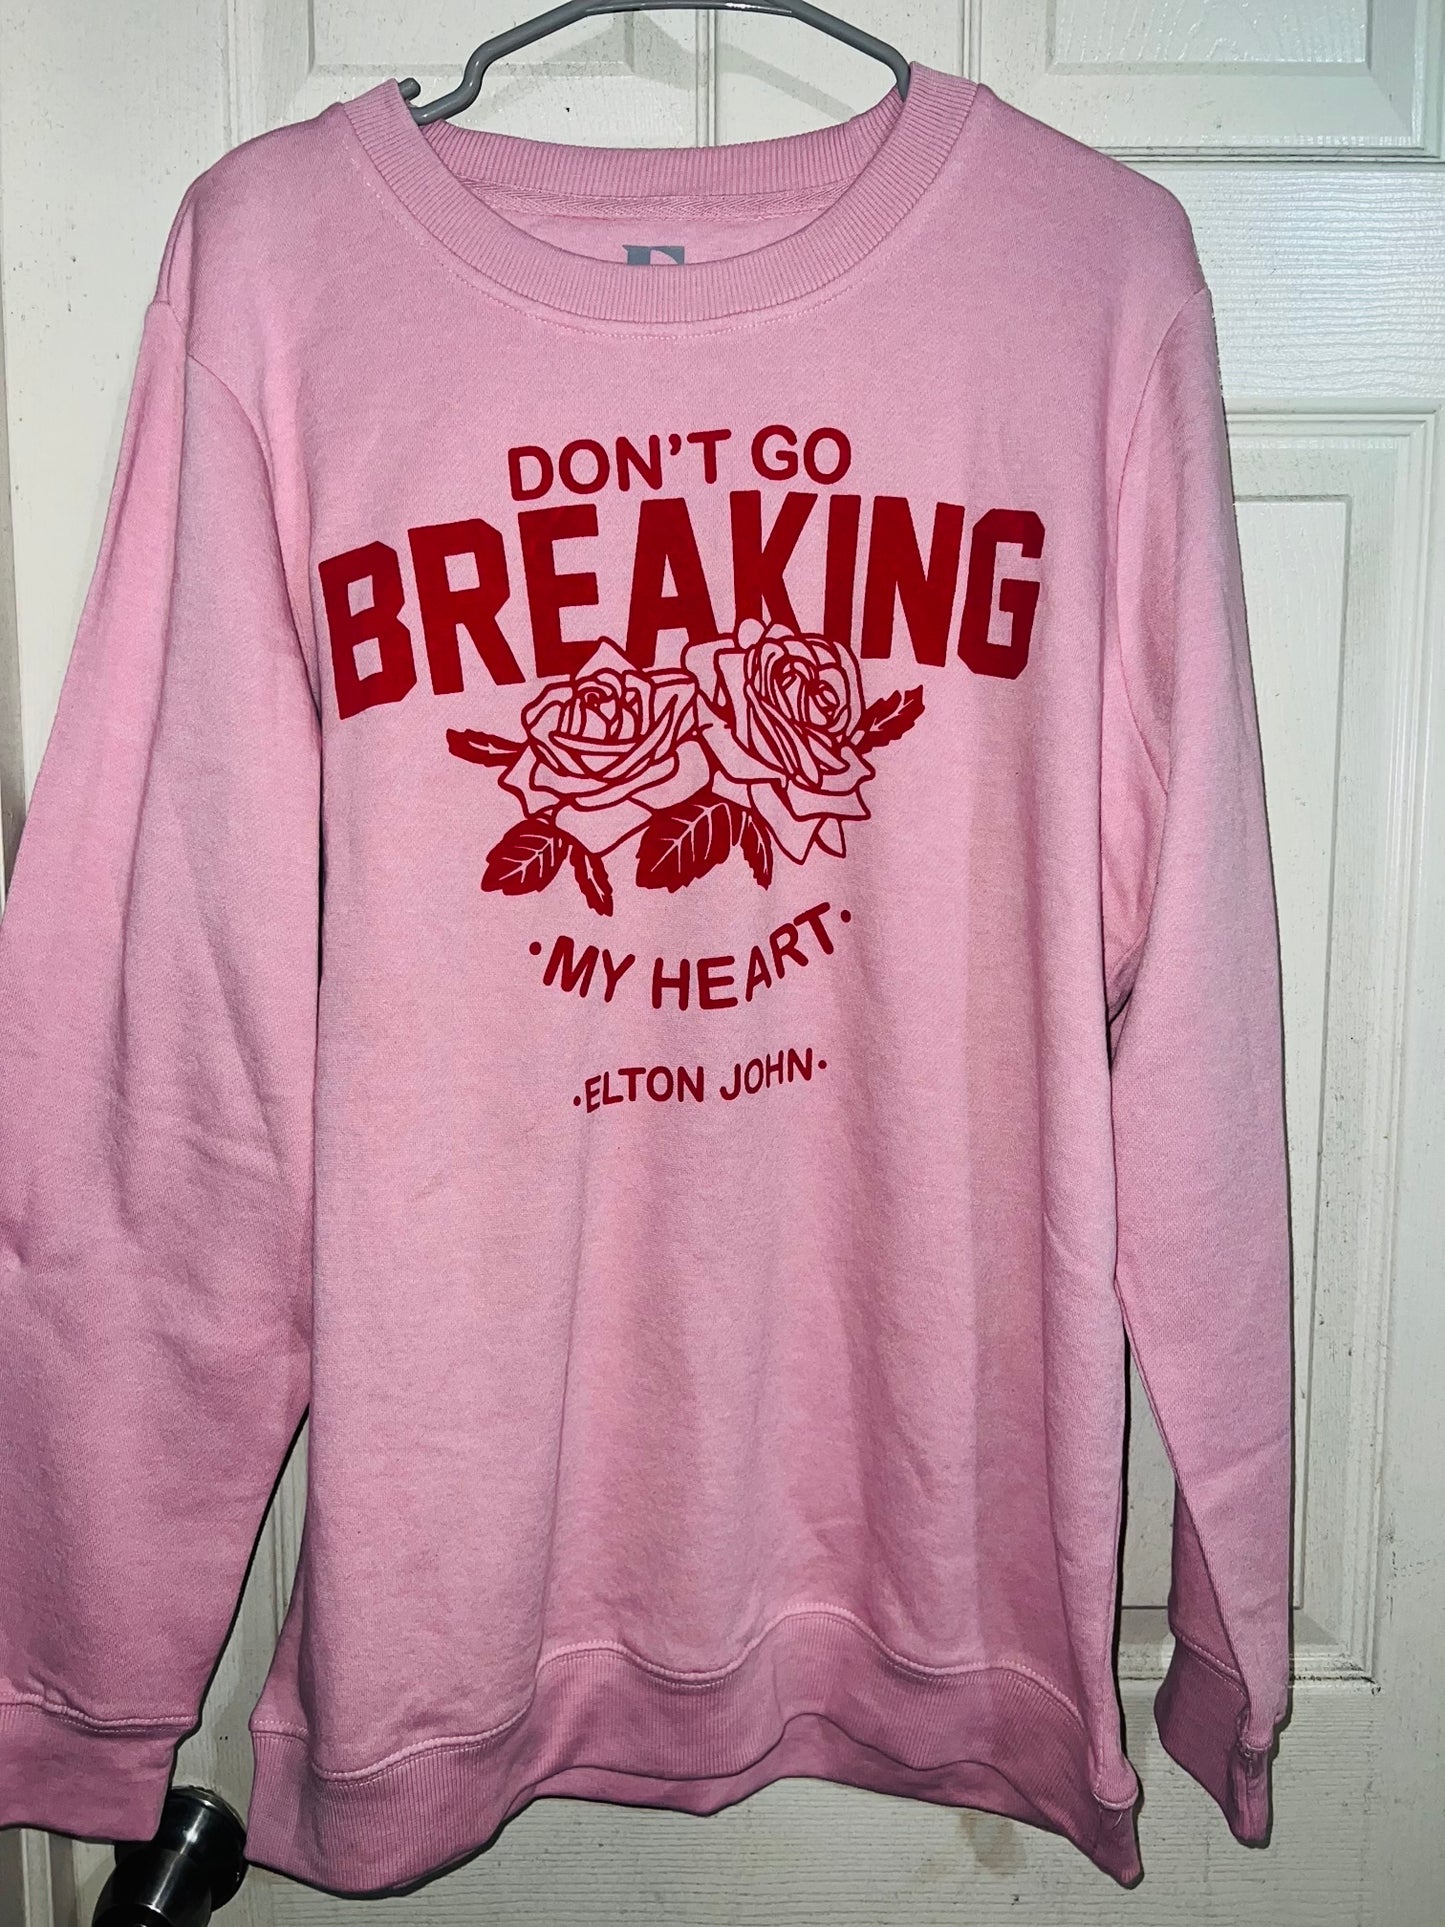 Elton John “Don’t go breaking my Heart” Oversized Distressed Sweatshirt